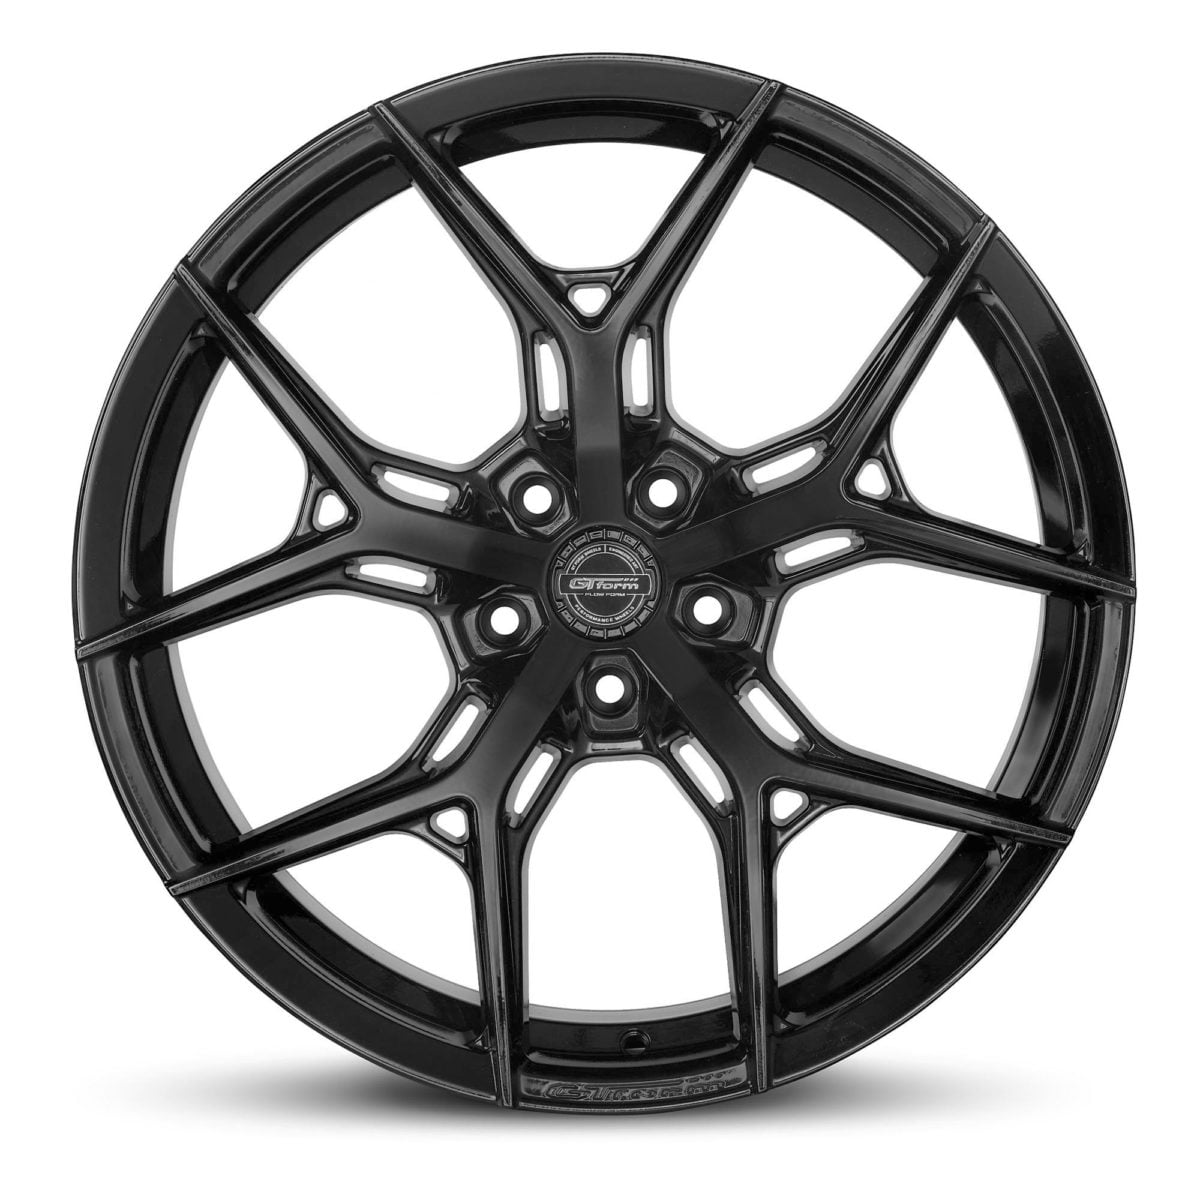 22 inch wheels satin black GT form torque 22" performance rims